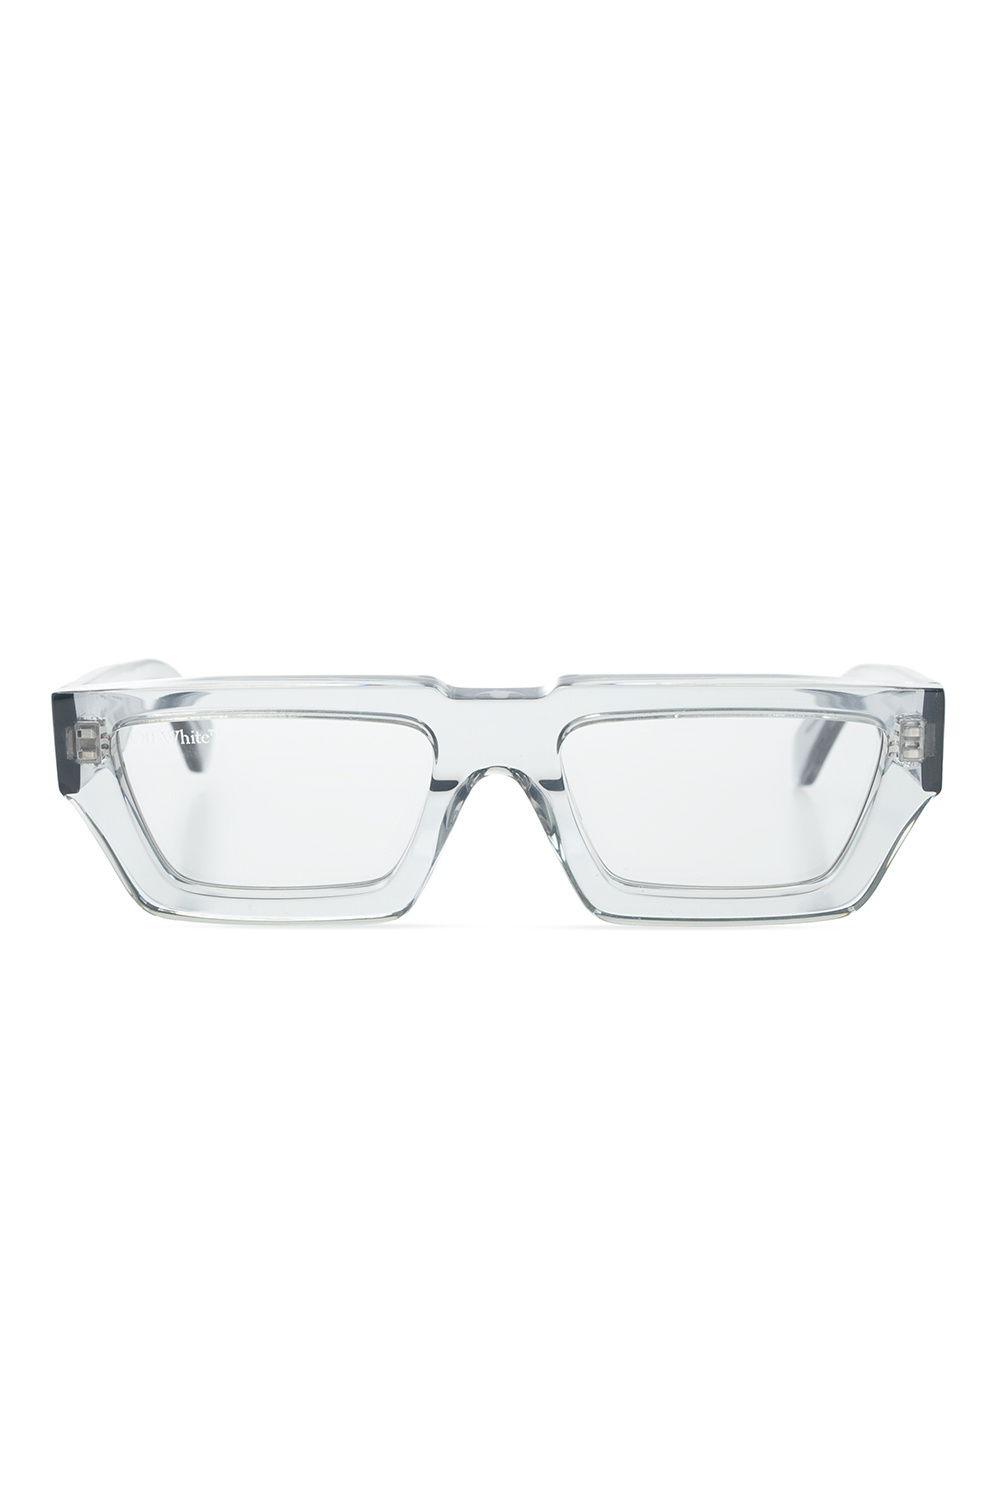 Off-White Glass Sunglasses for Men